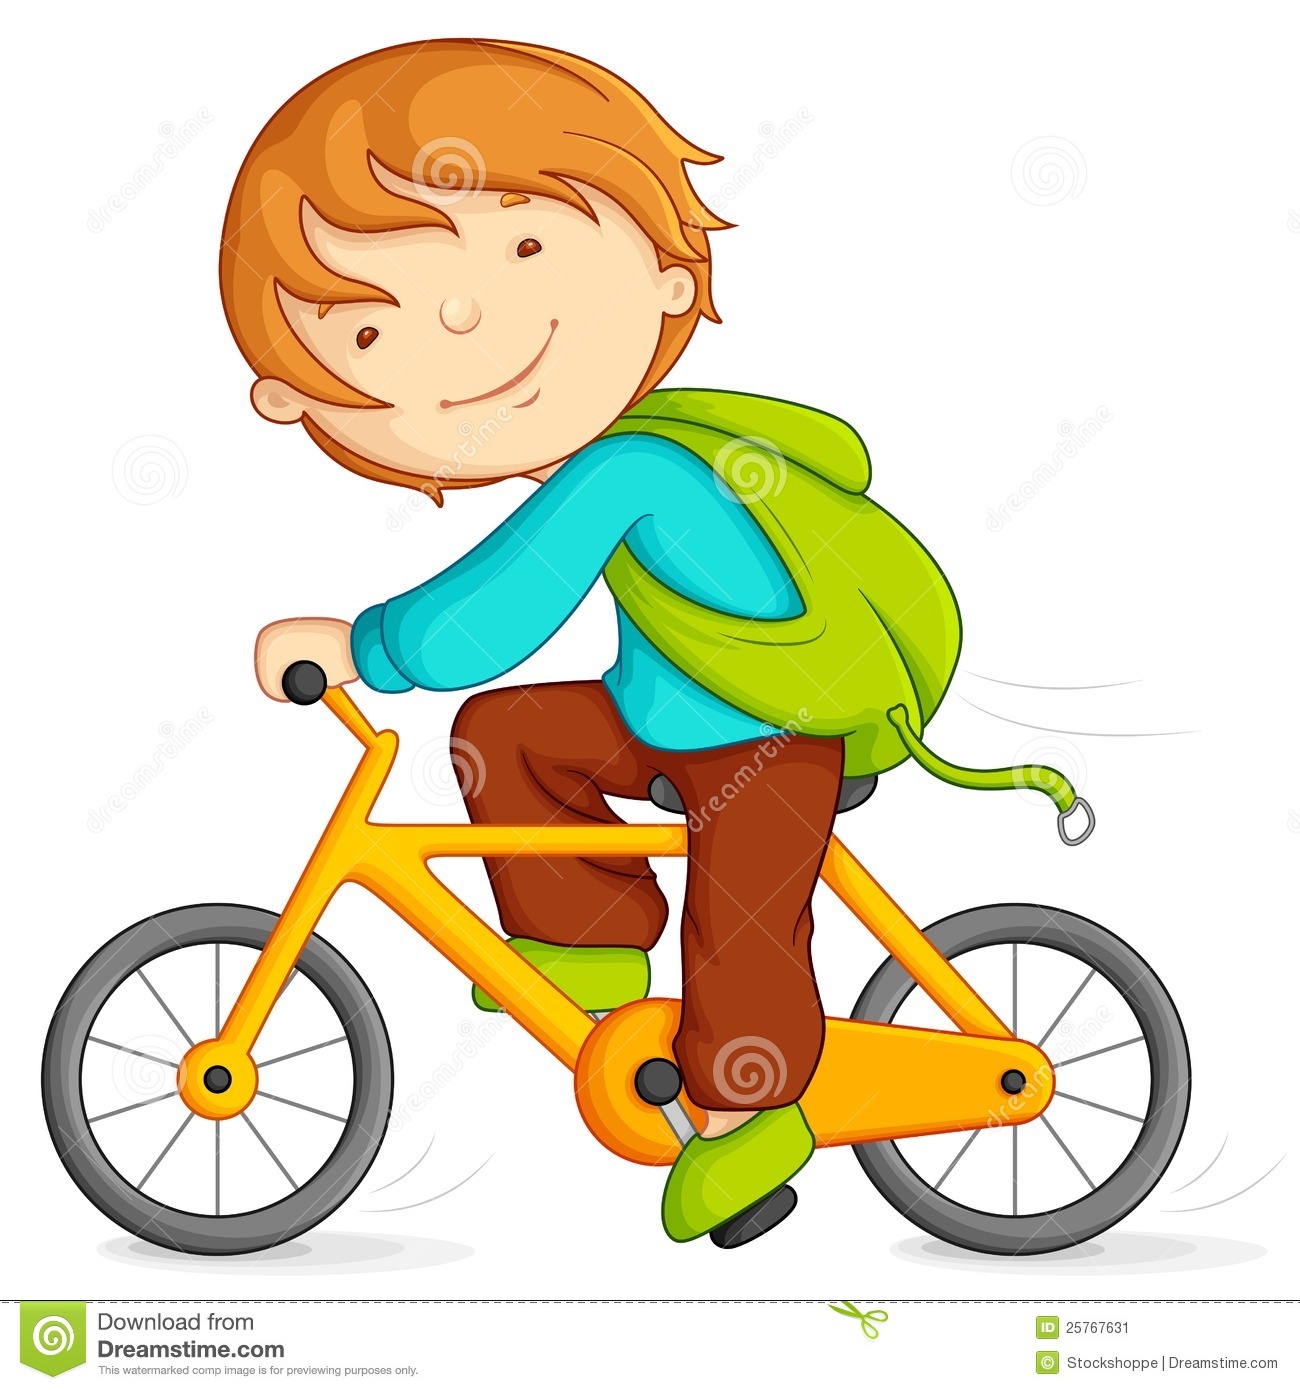 Child Riding A Bike Clipart.